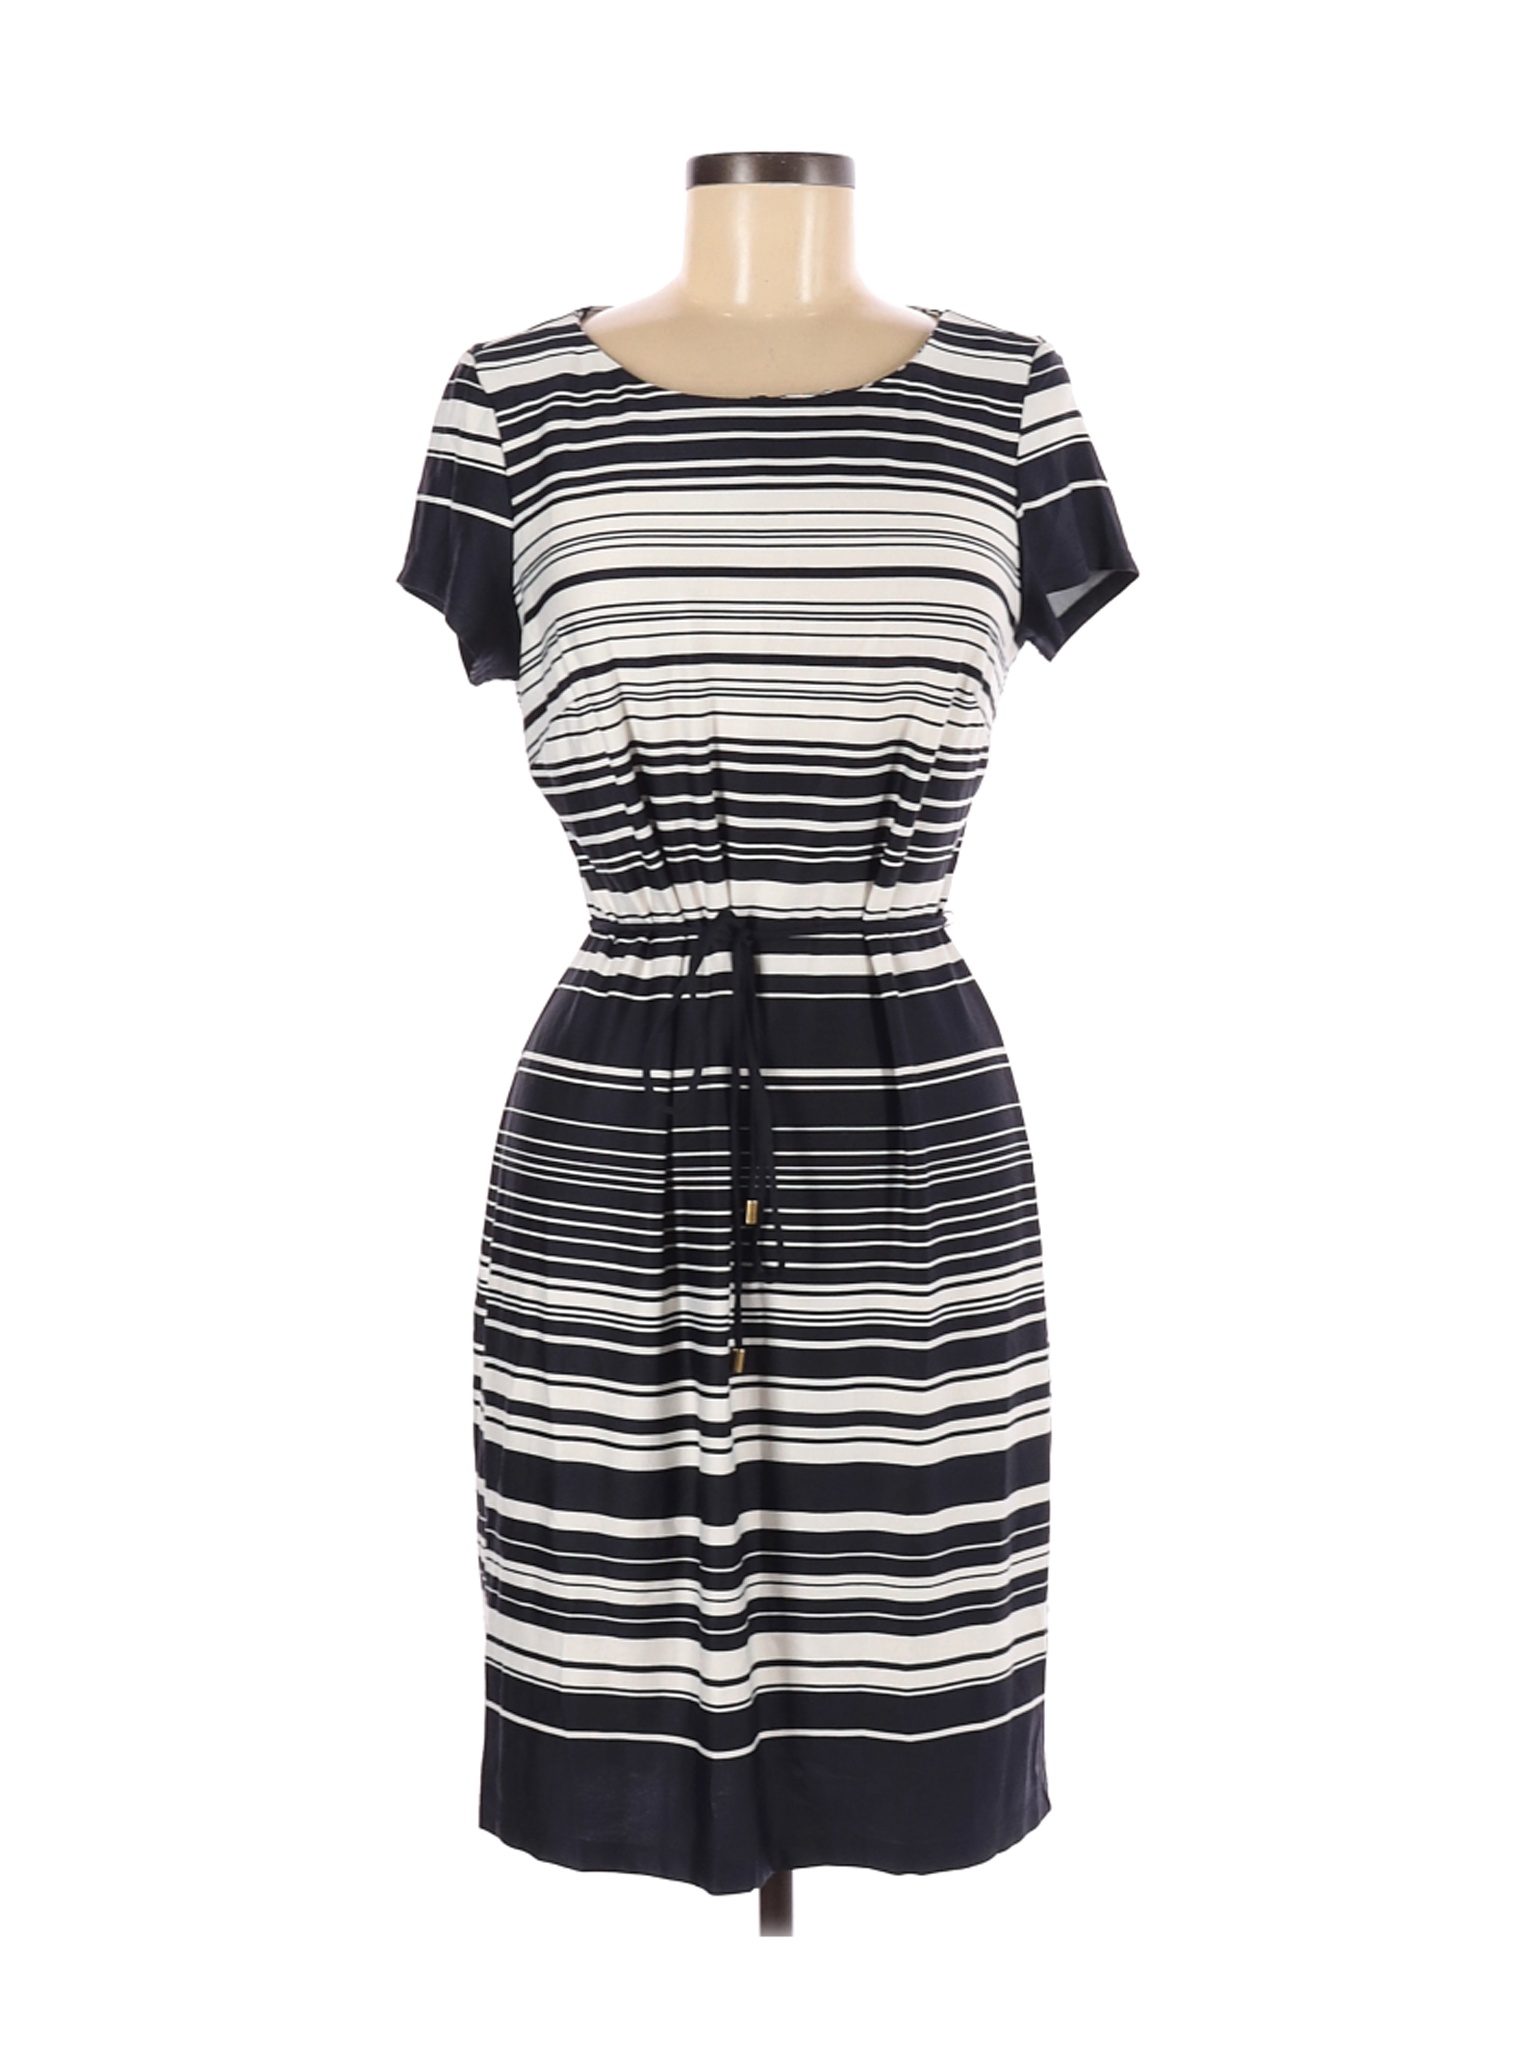 SOHO Apparel Ltd Women Black Casual Dress M | eBay